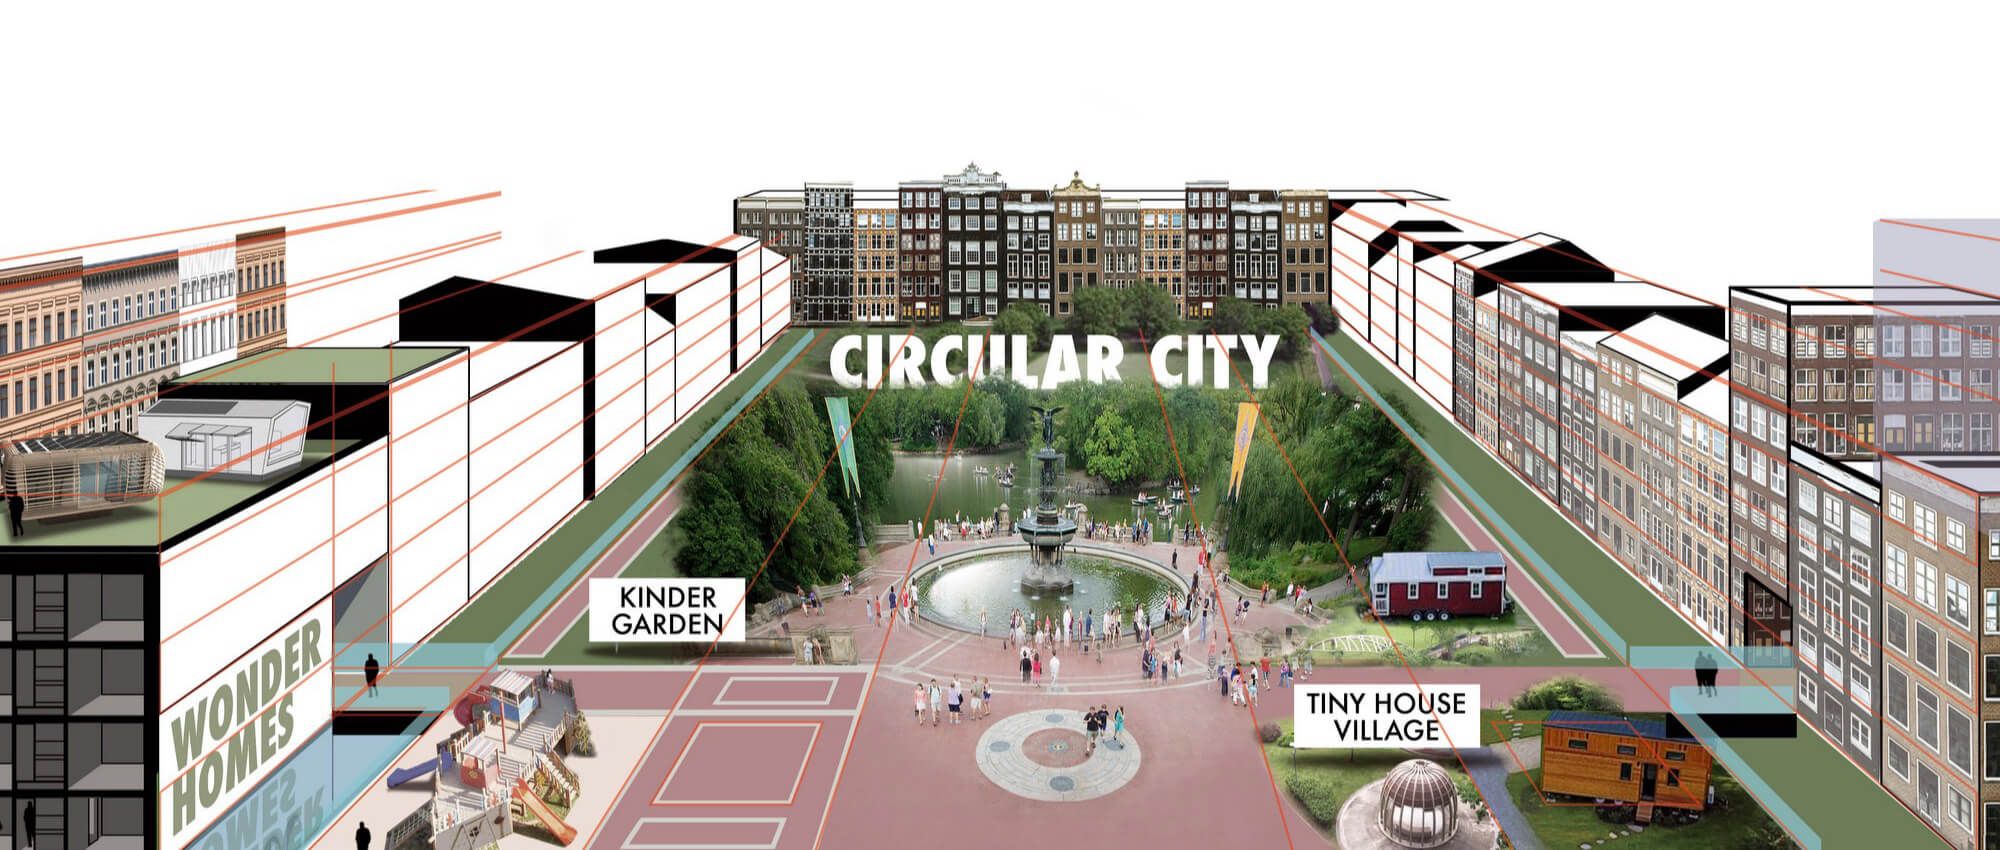 Illustration der Stadtutopie "Circular City" mit Altbauten, Neubauten, Tiny Houses und Gärten